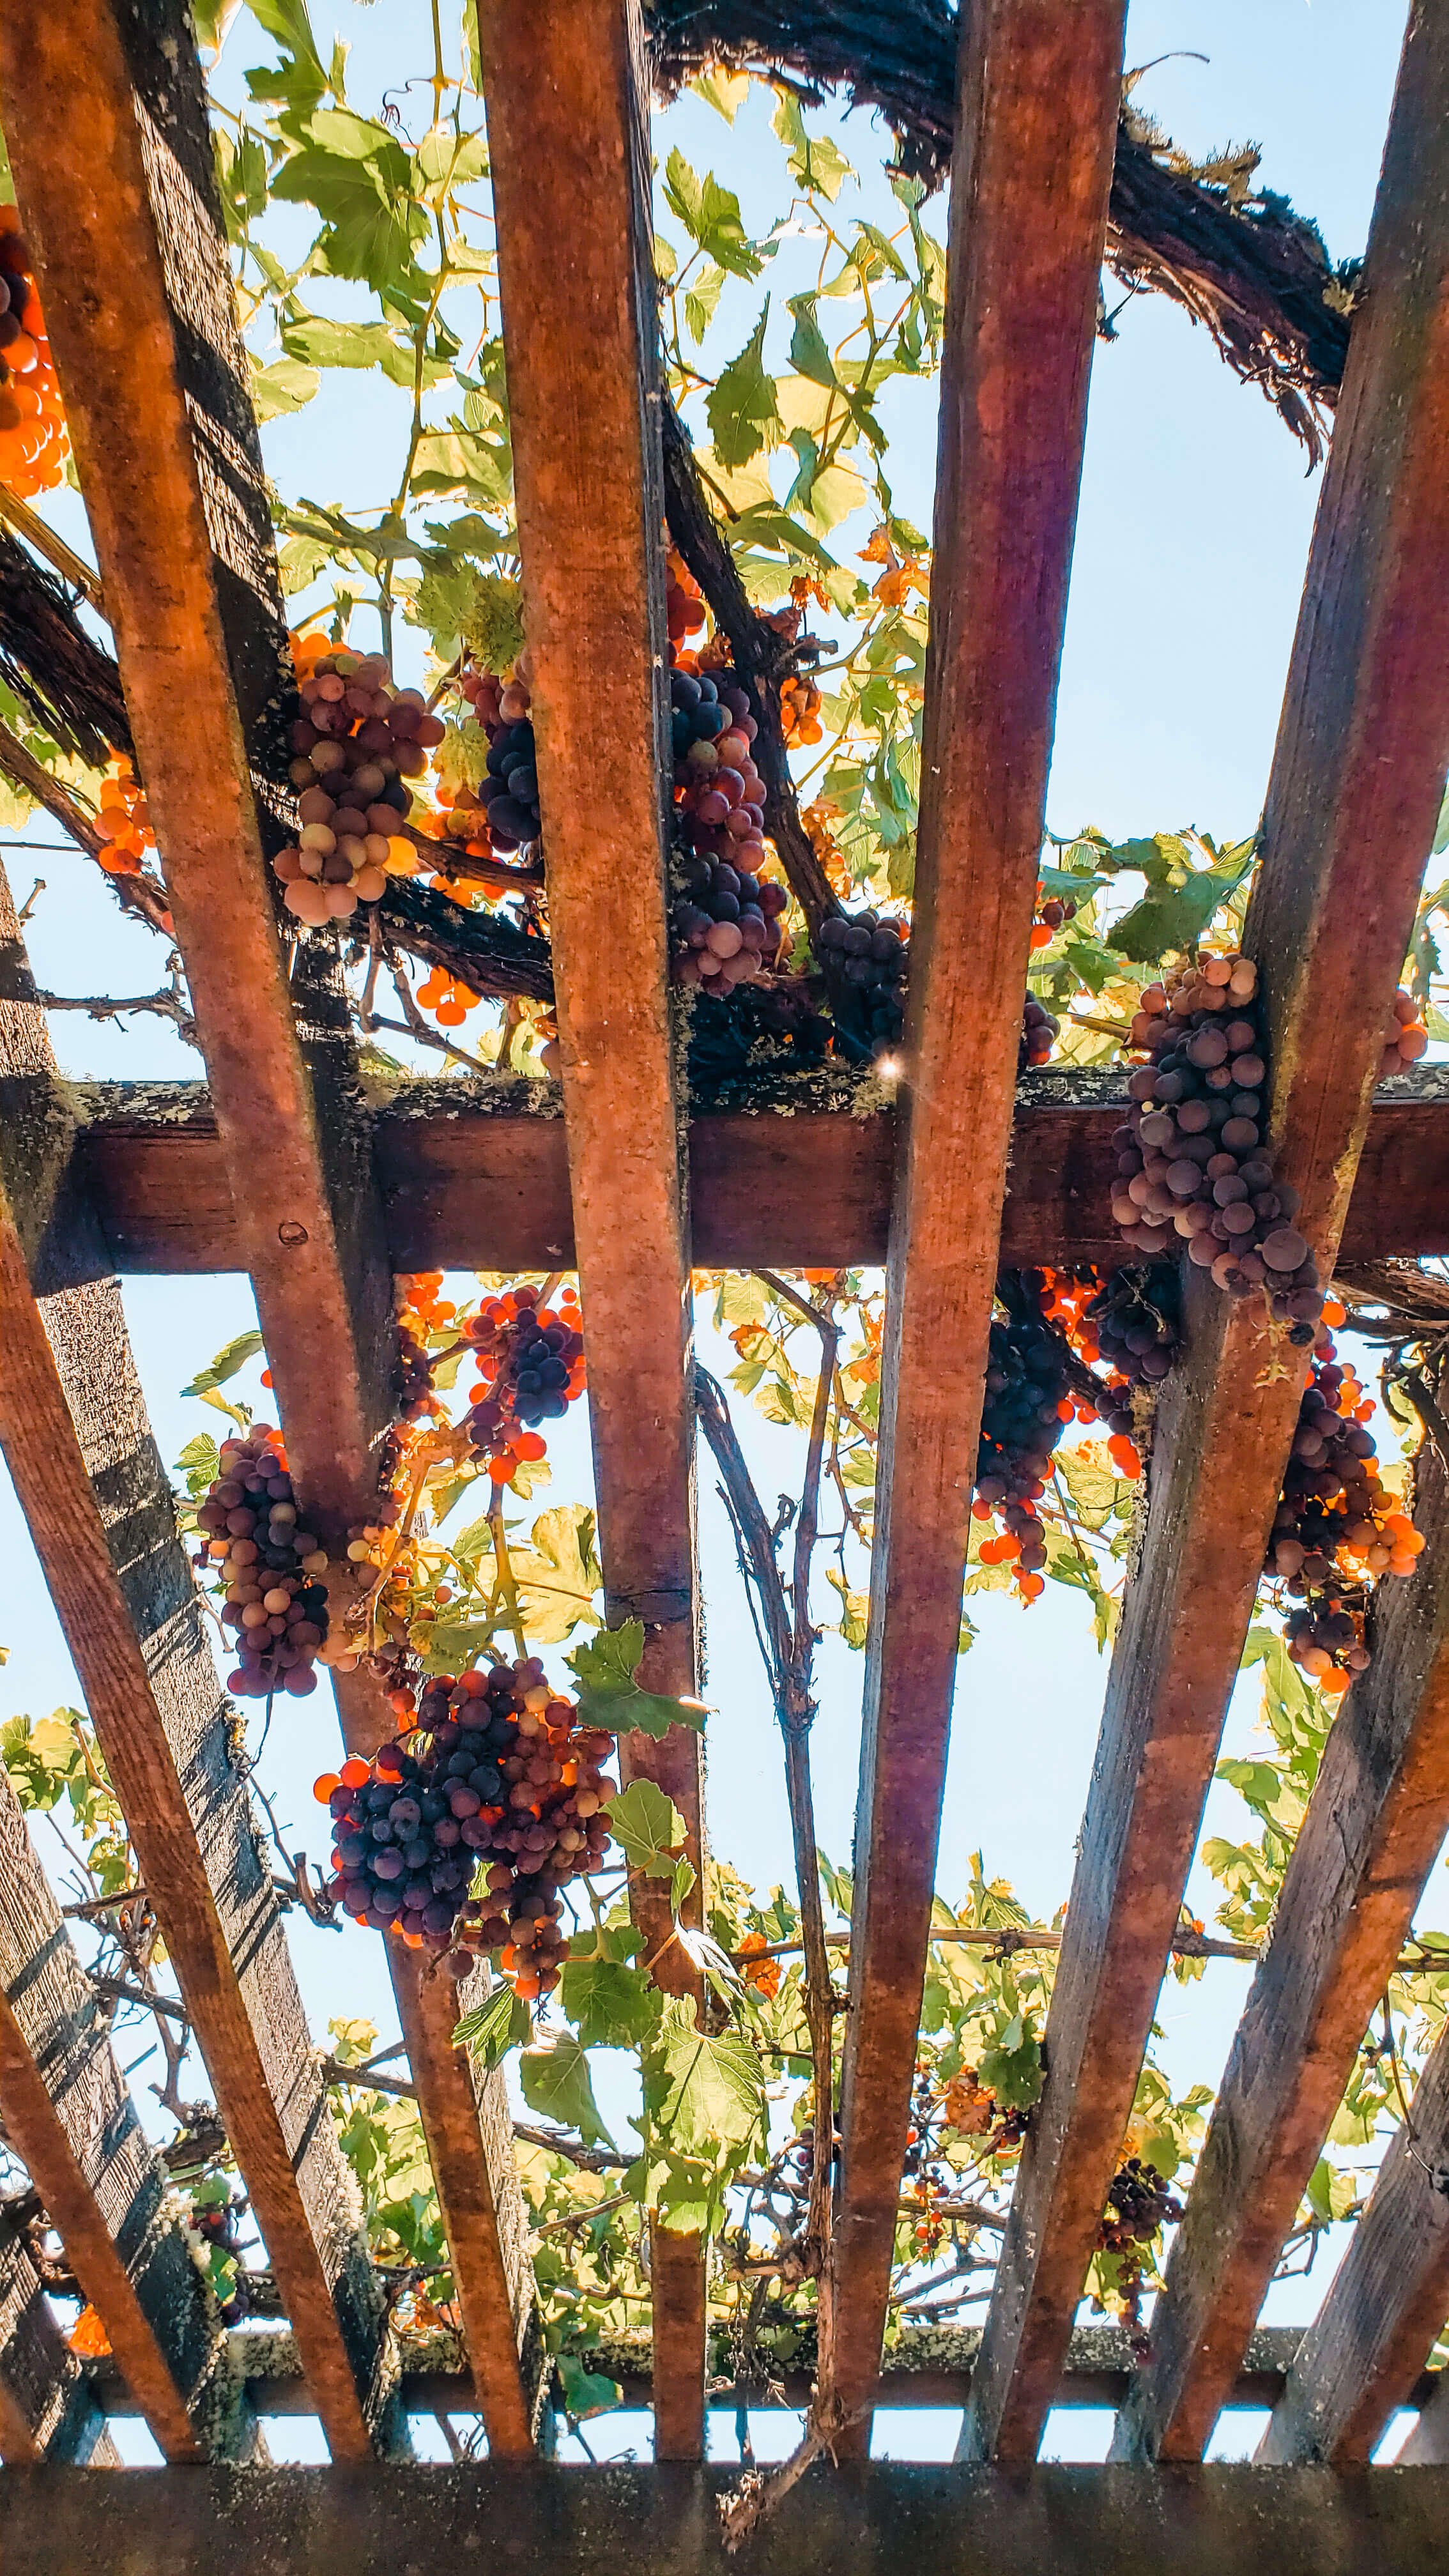 grapes on the vine at Dutton Estates in Sonoma County